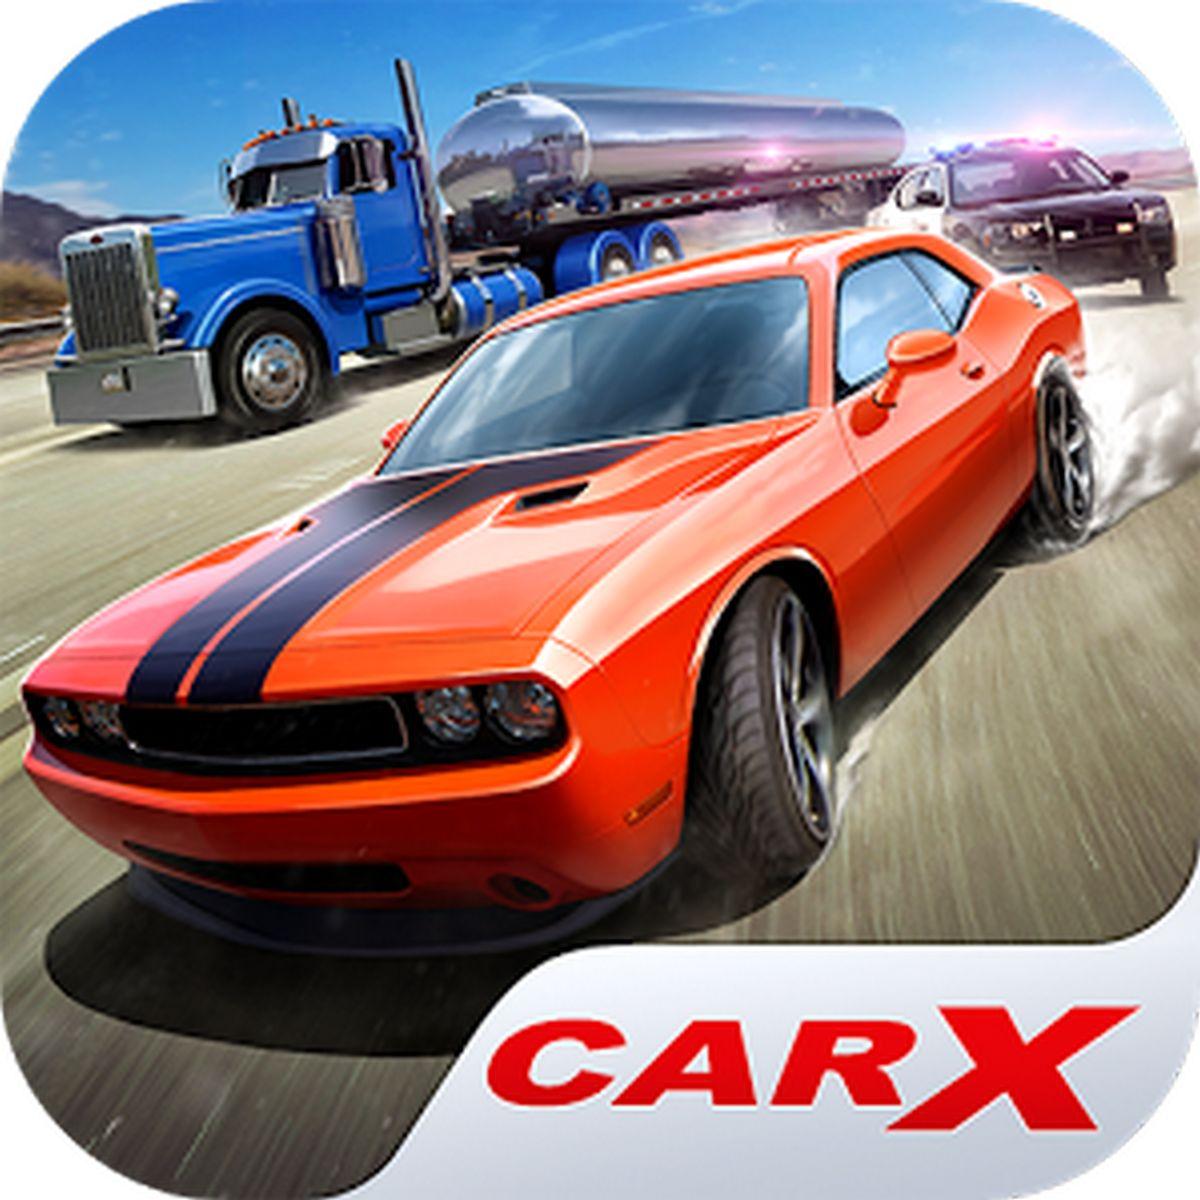 CarX Highway Racing APK MOD v1.71.3 (Dinero infinito)